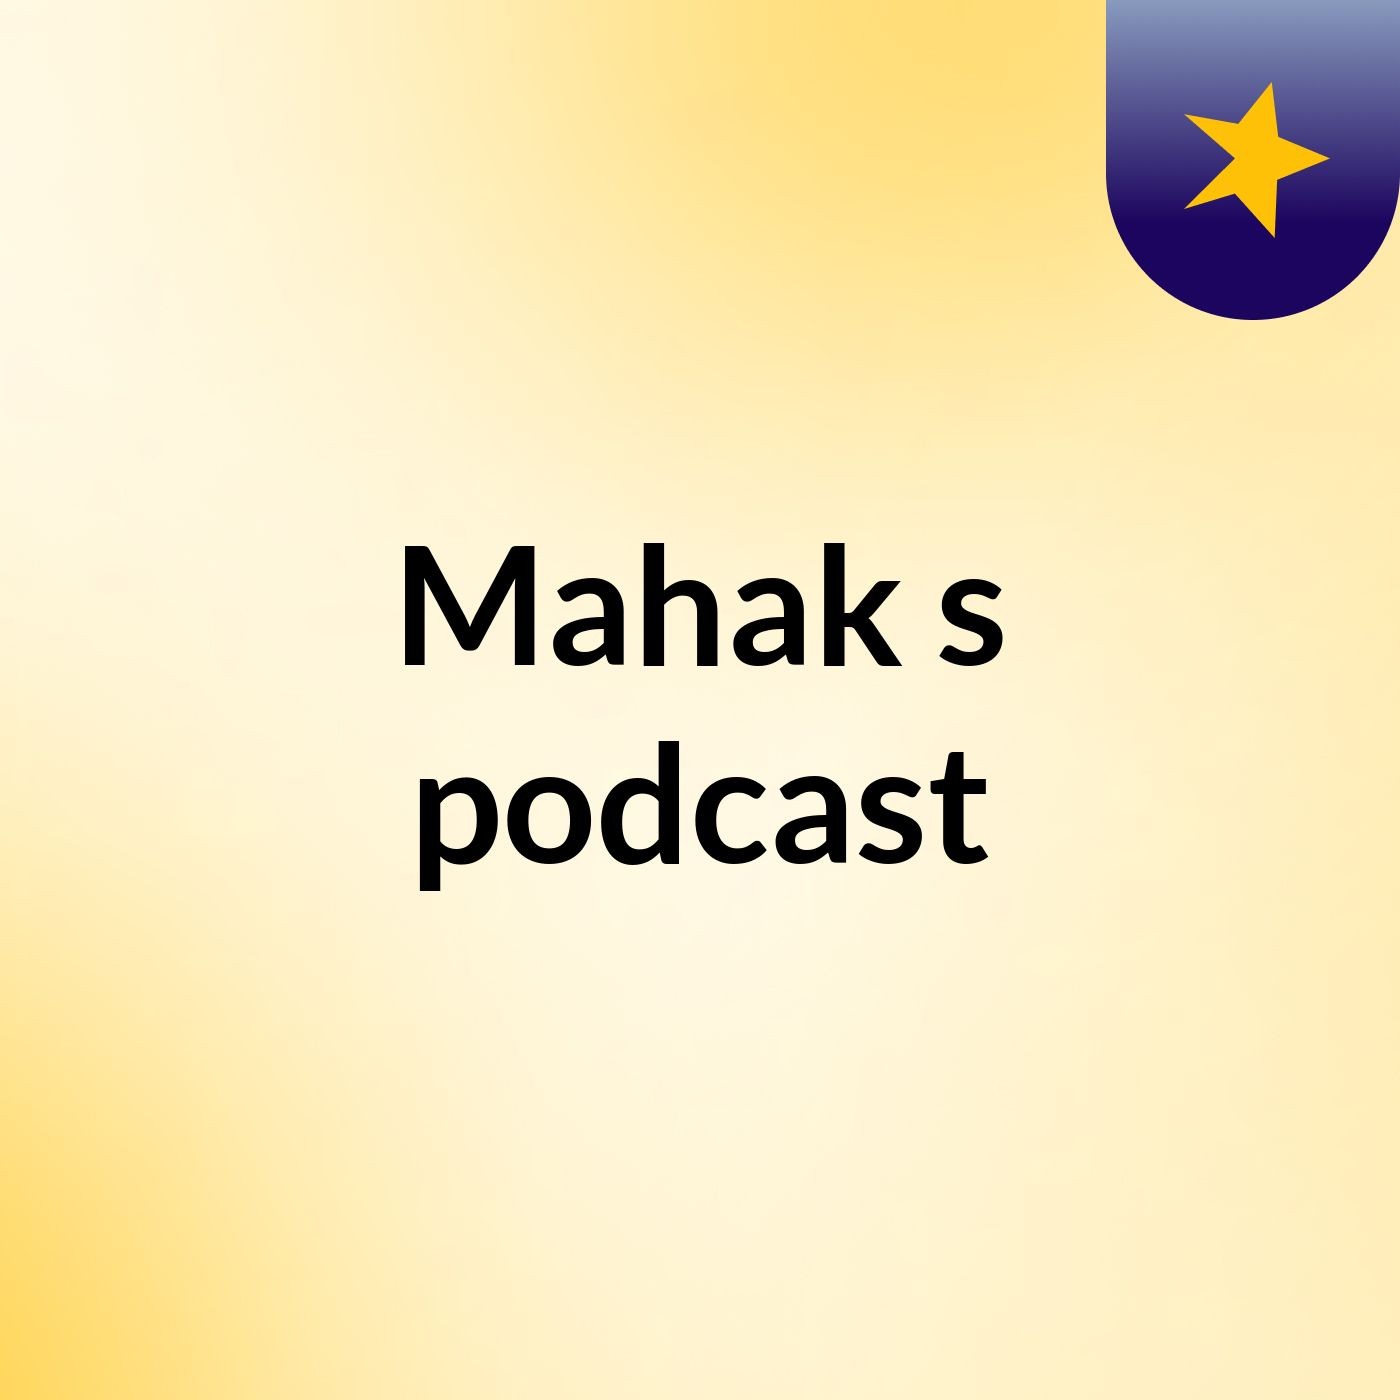 Episode 3 - Mahak's podcast